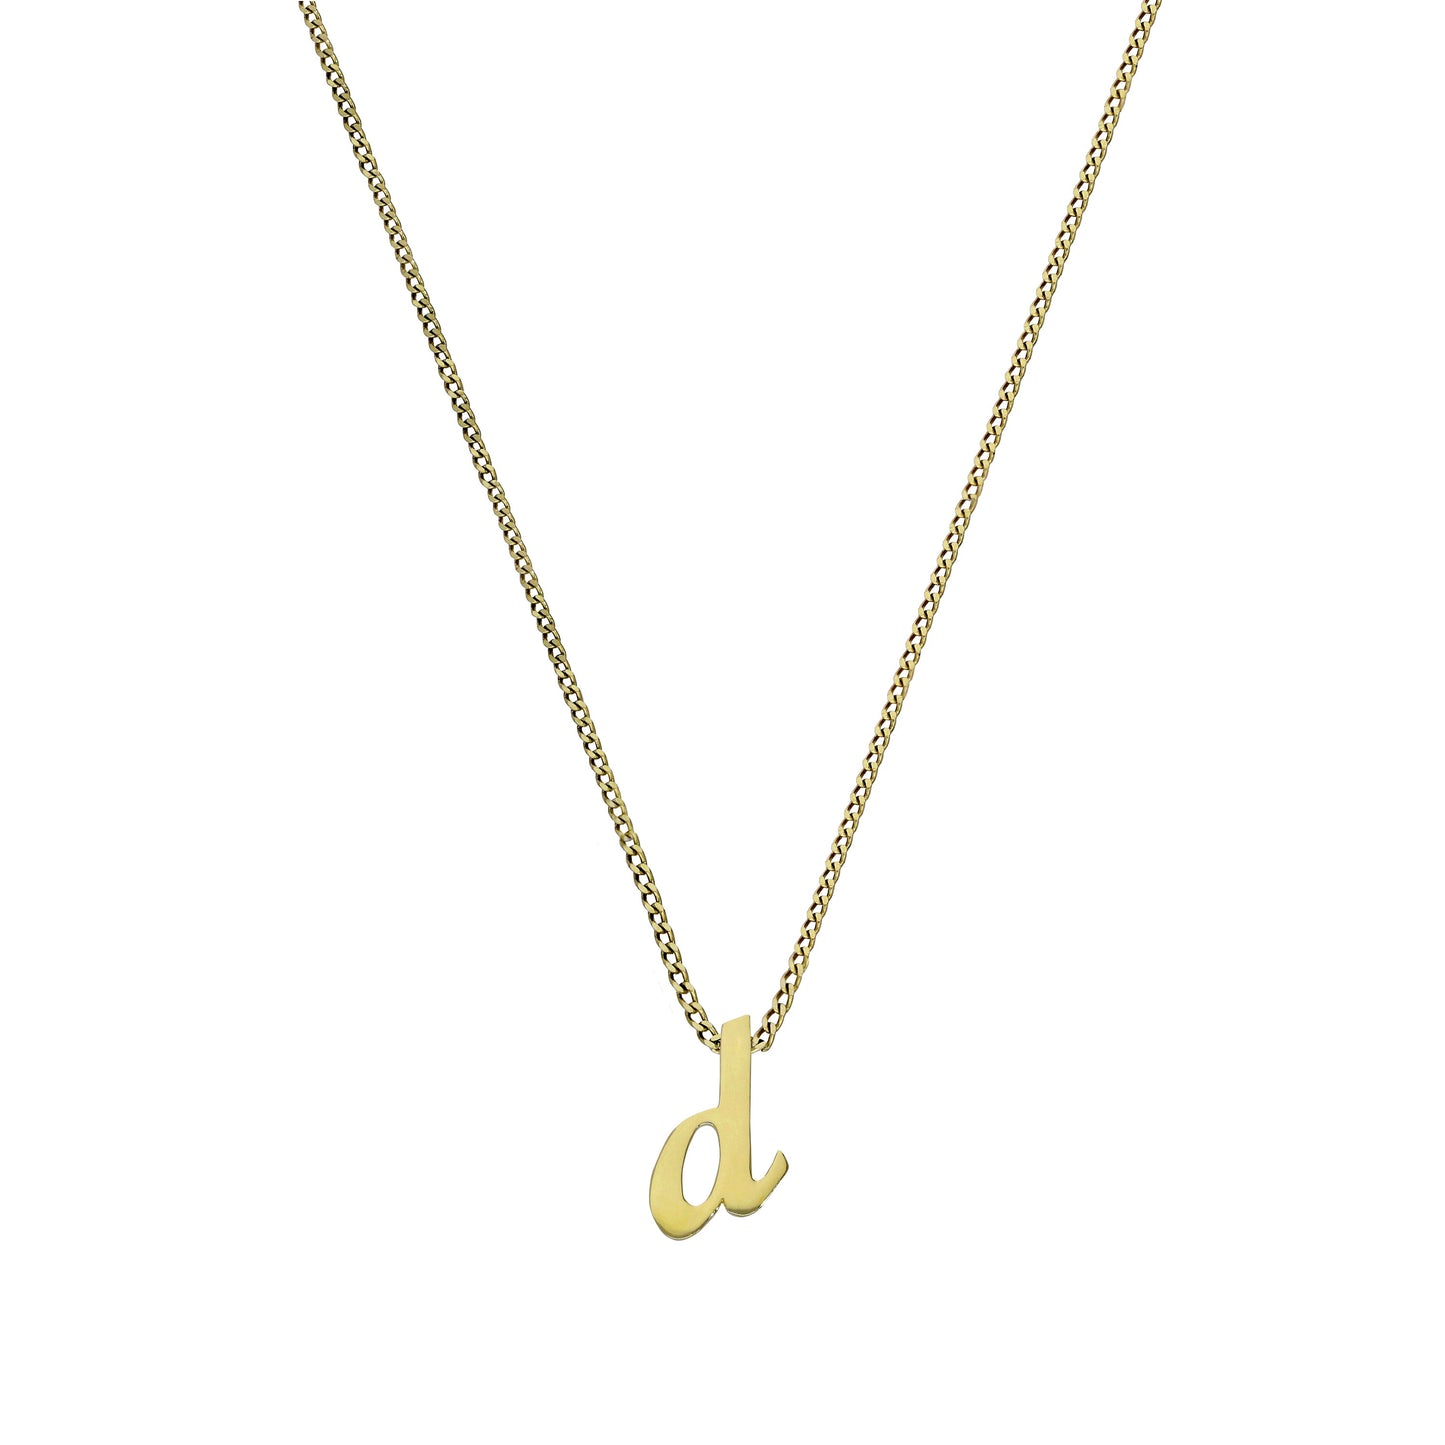 Tiny 9ct Gold Alphabet Letter D Pendant Necklace 16 - 20 Inches